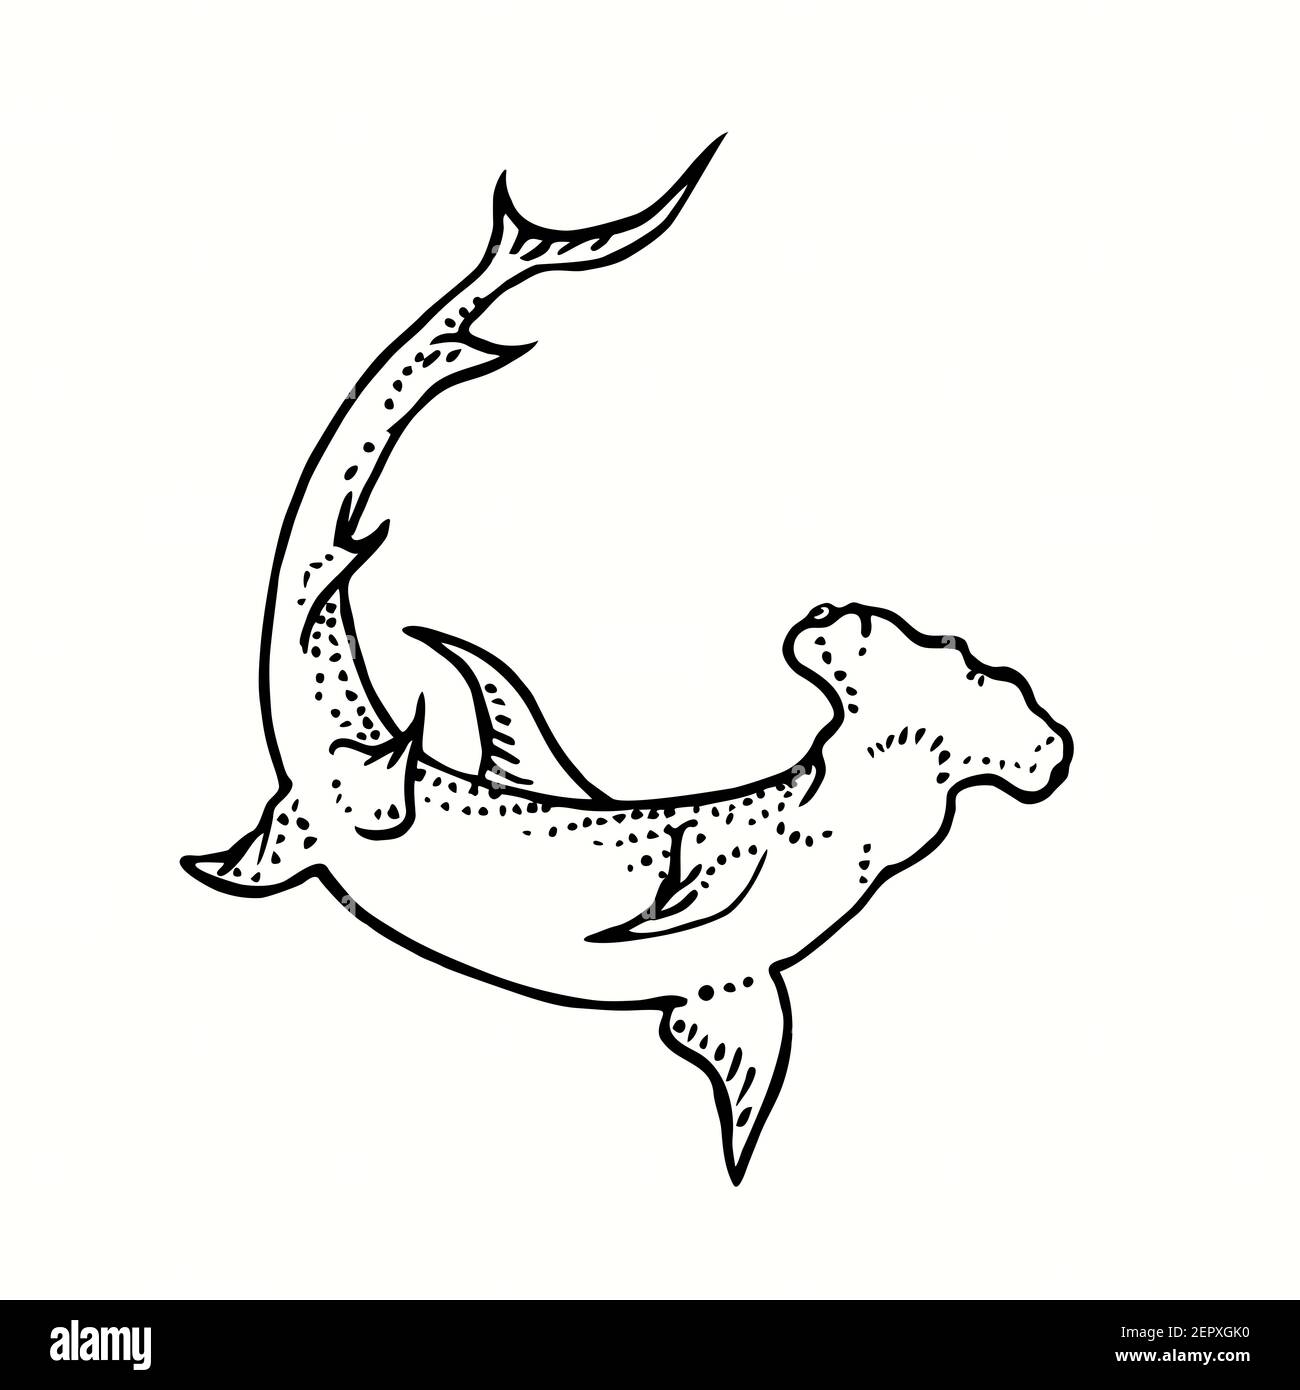 Tiburon blanco dibujo fotografías e imágenes de alta resolución - Alamy